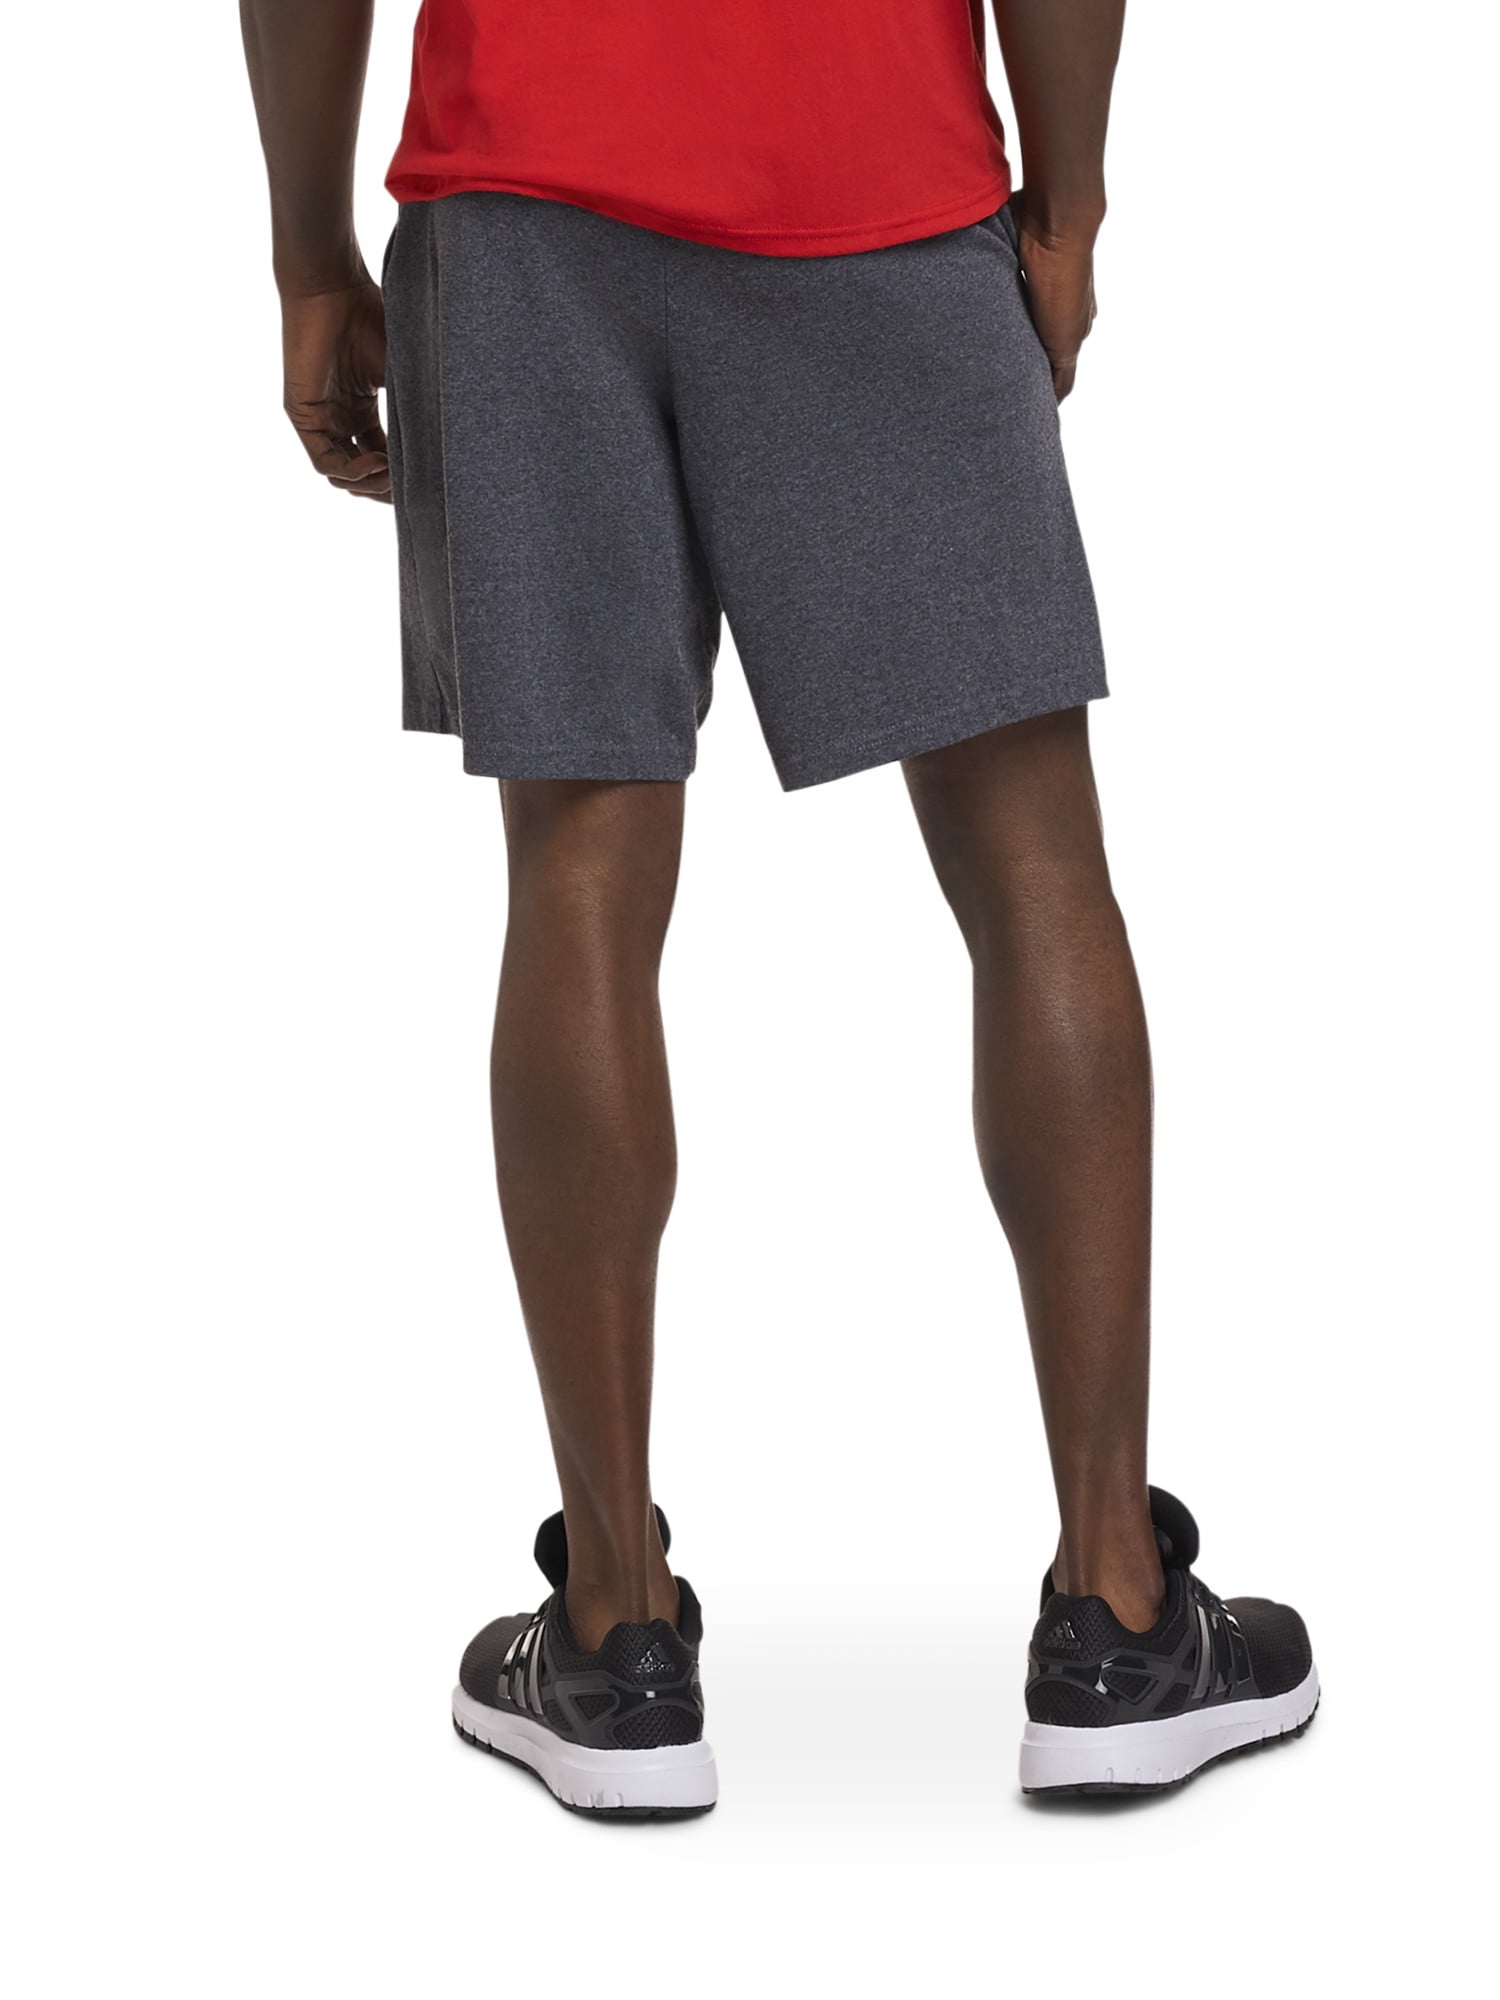 Mens Russell Shorts XL 40-42  Gym shorts womens, Clothes design, Womens  shorts